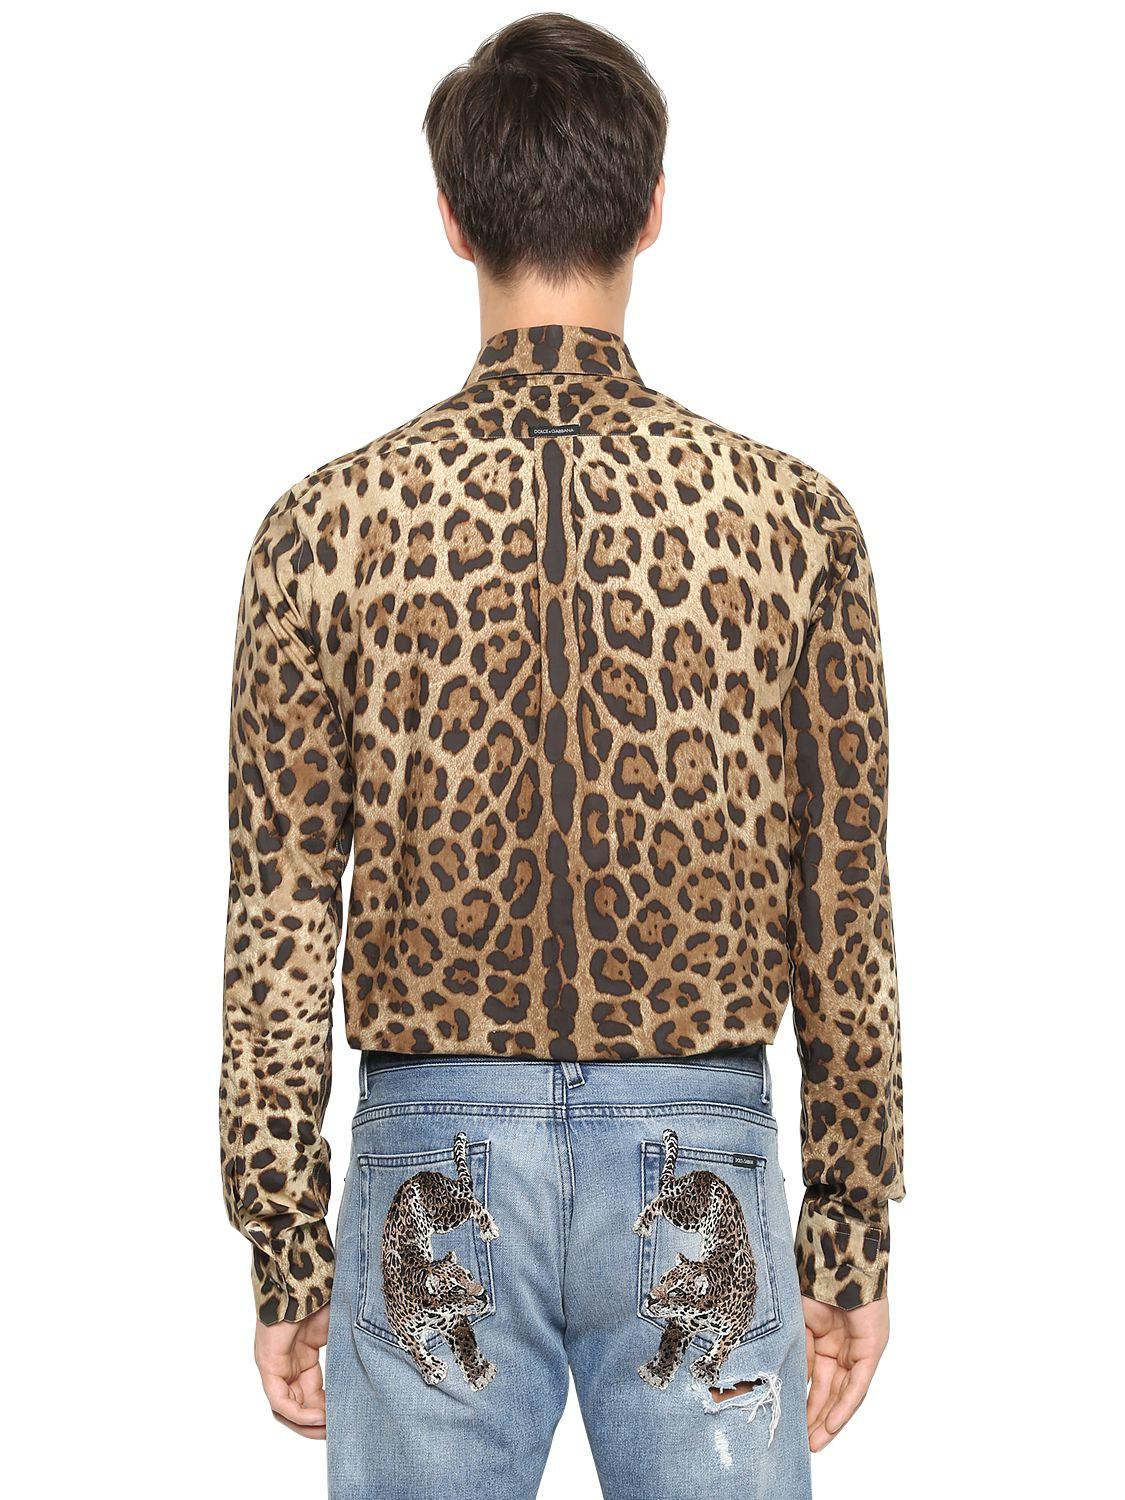 Dolce & Gabbana Cotton Leopard Print Shirt in Brown for Men - Lyst